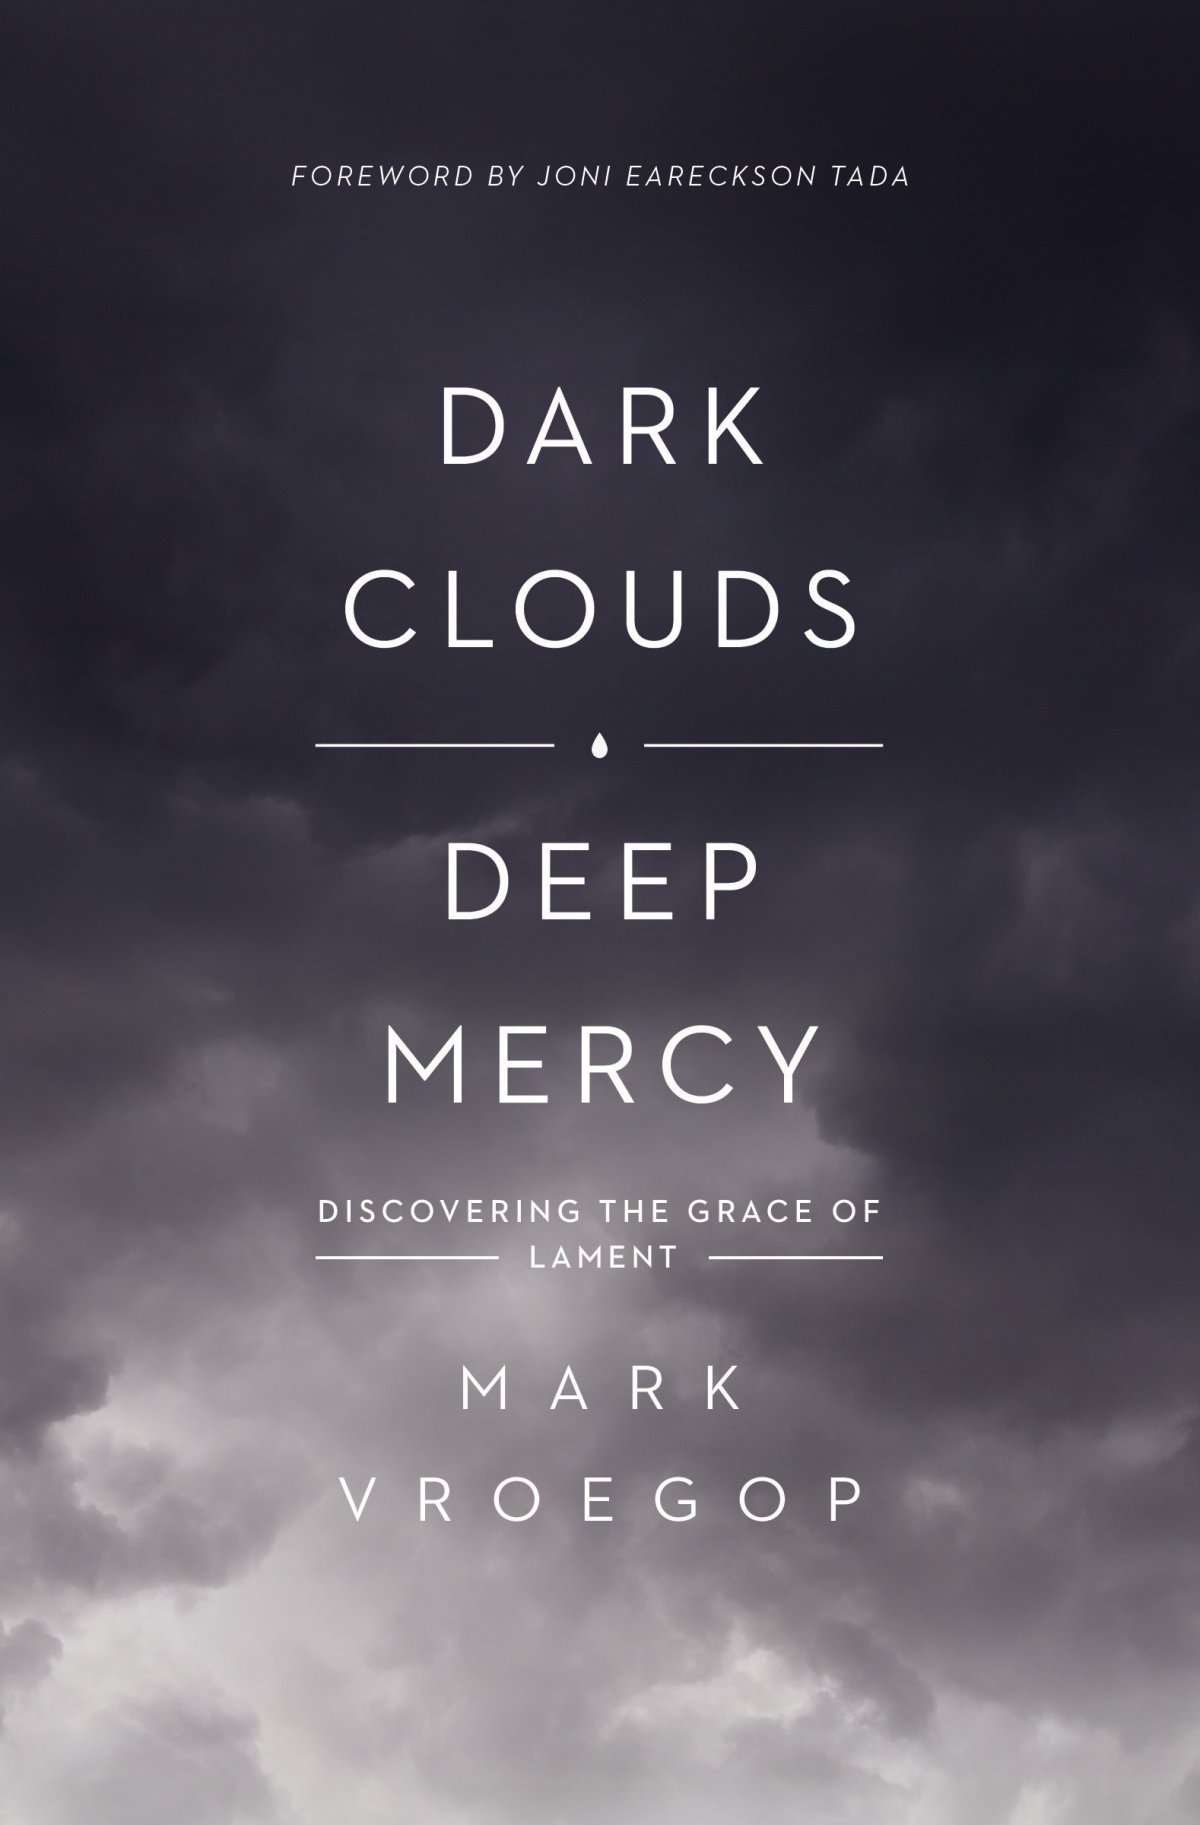 Dark Clouds, Deep Mercy ~ A Book Review